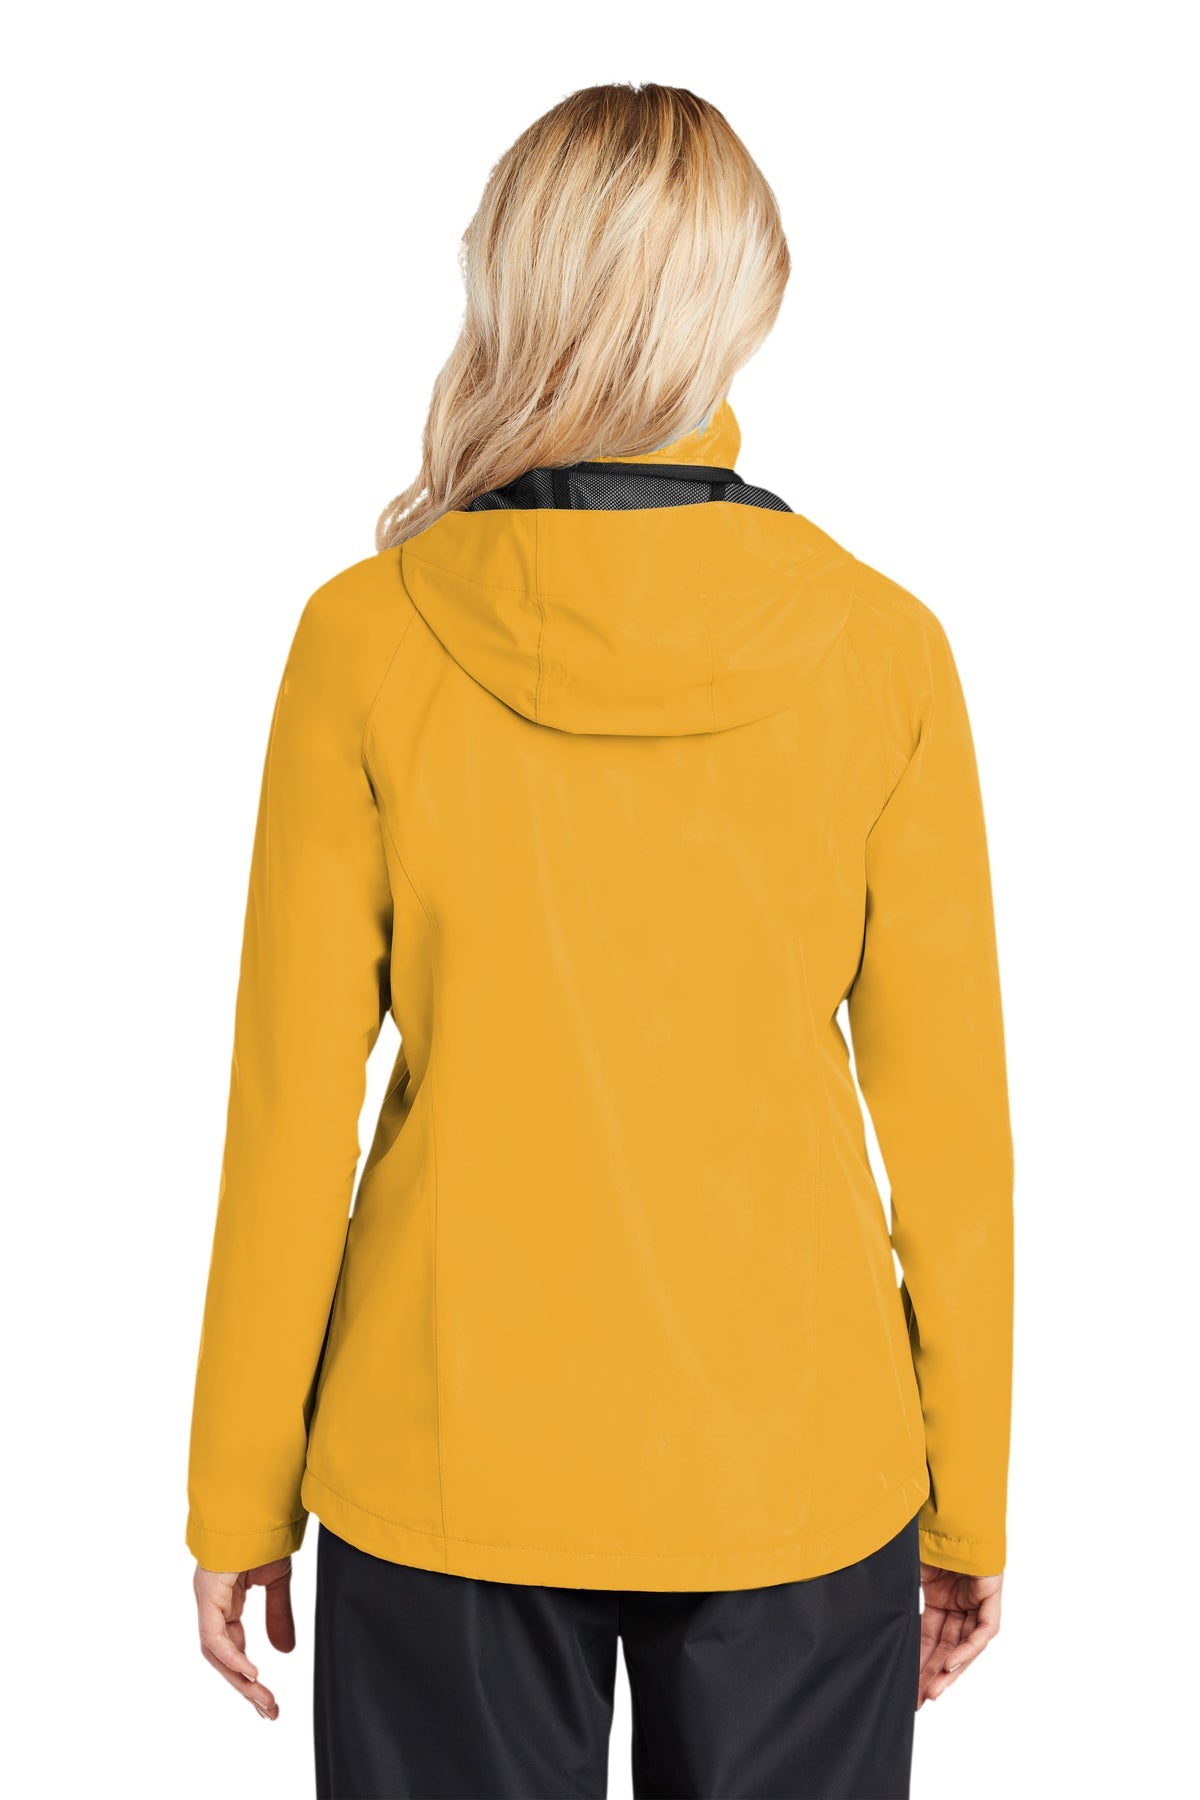 Port Authority Ladies Torrent Customized Waterproof Jackets, Slickers, Yellow